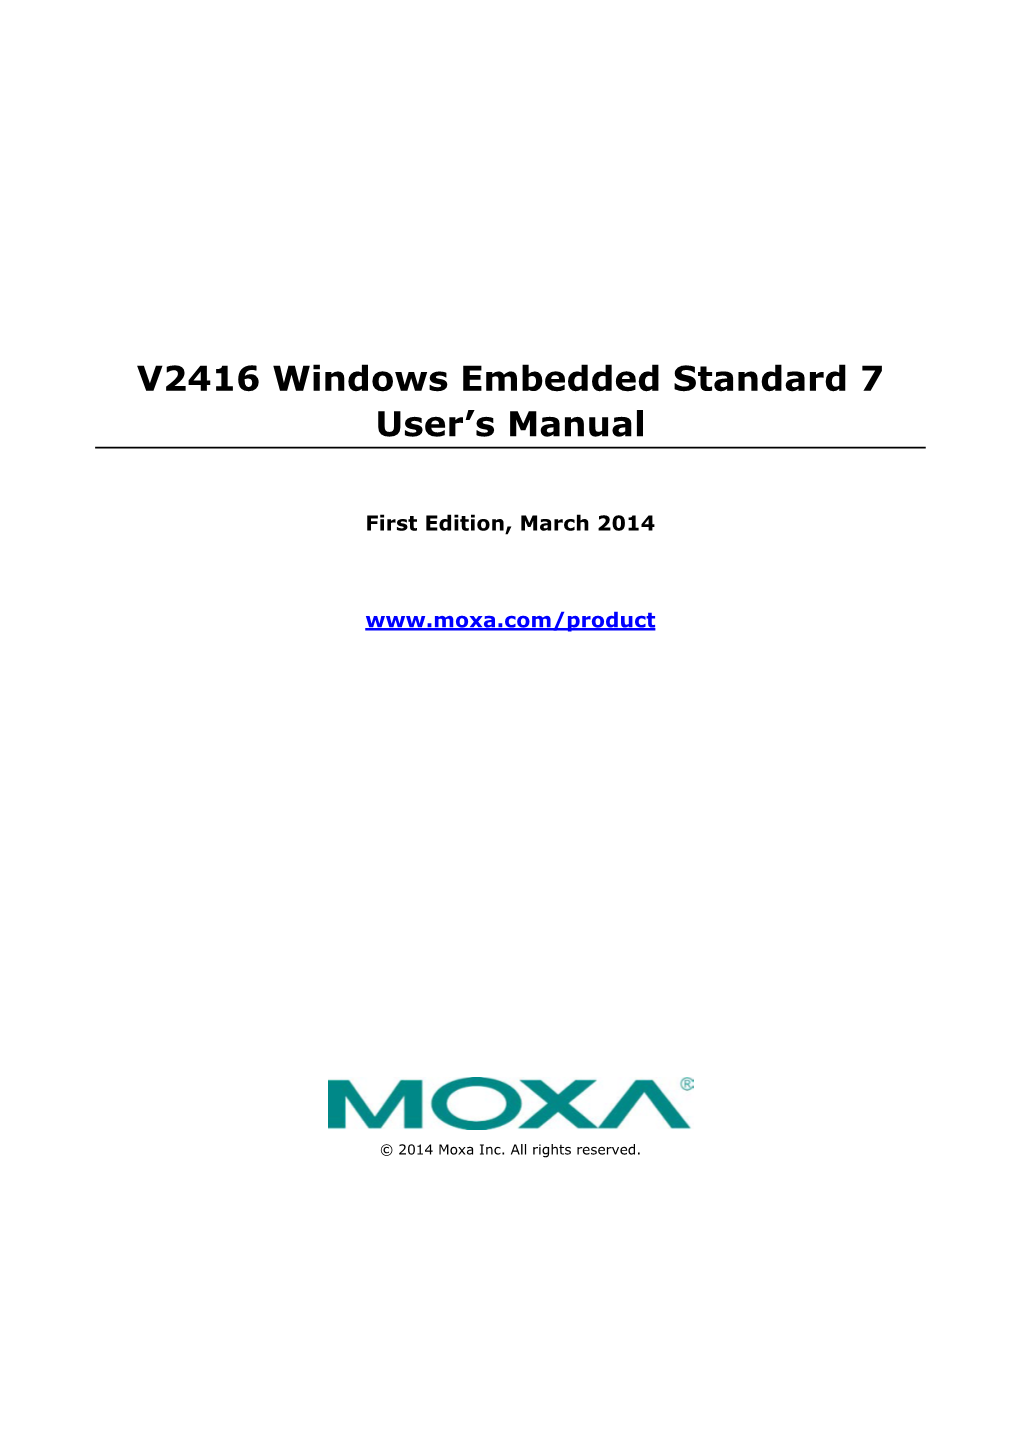 V2416 Windows Embedded Standard 7 User's Manual